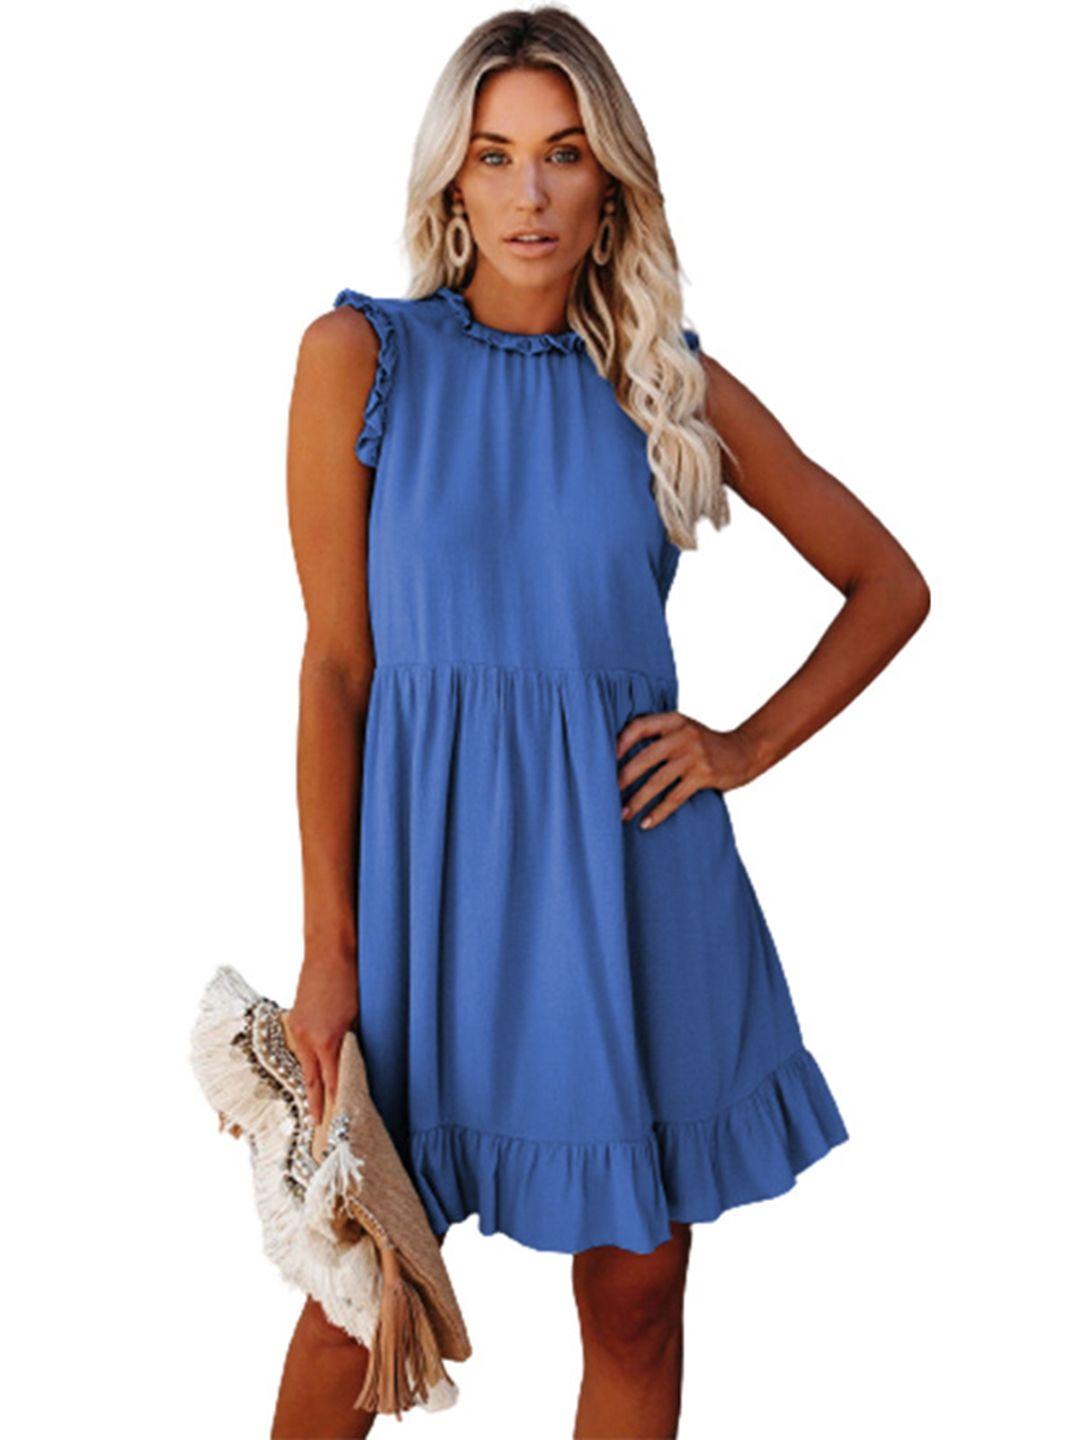 stylecast blue high neck cotton fit & flare dress